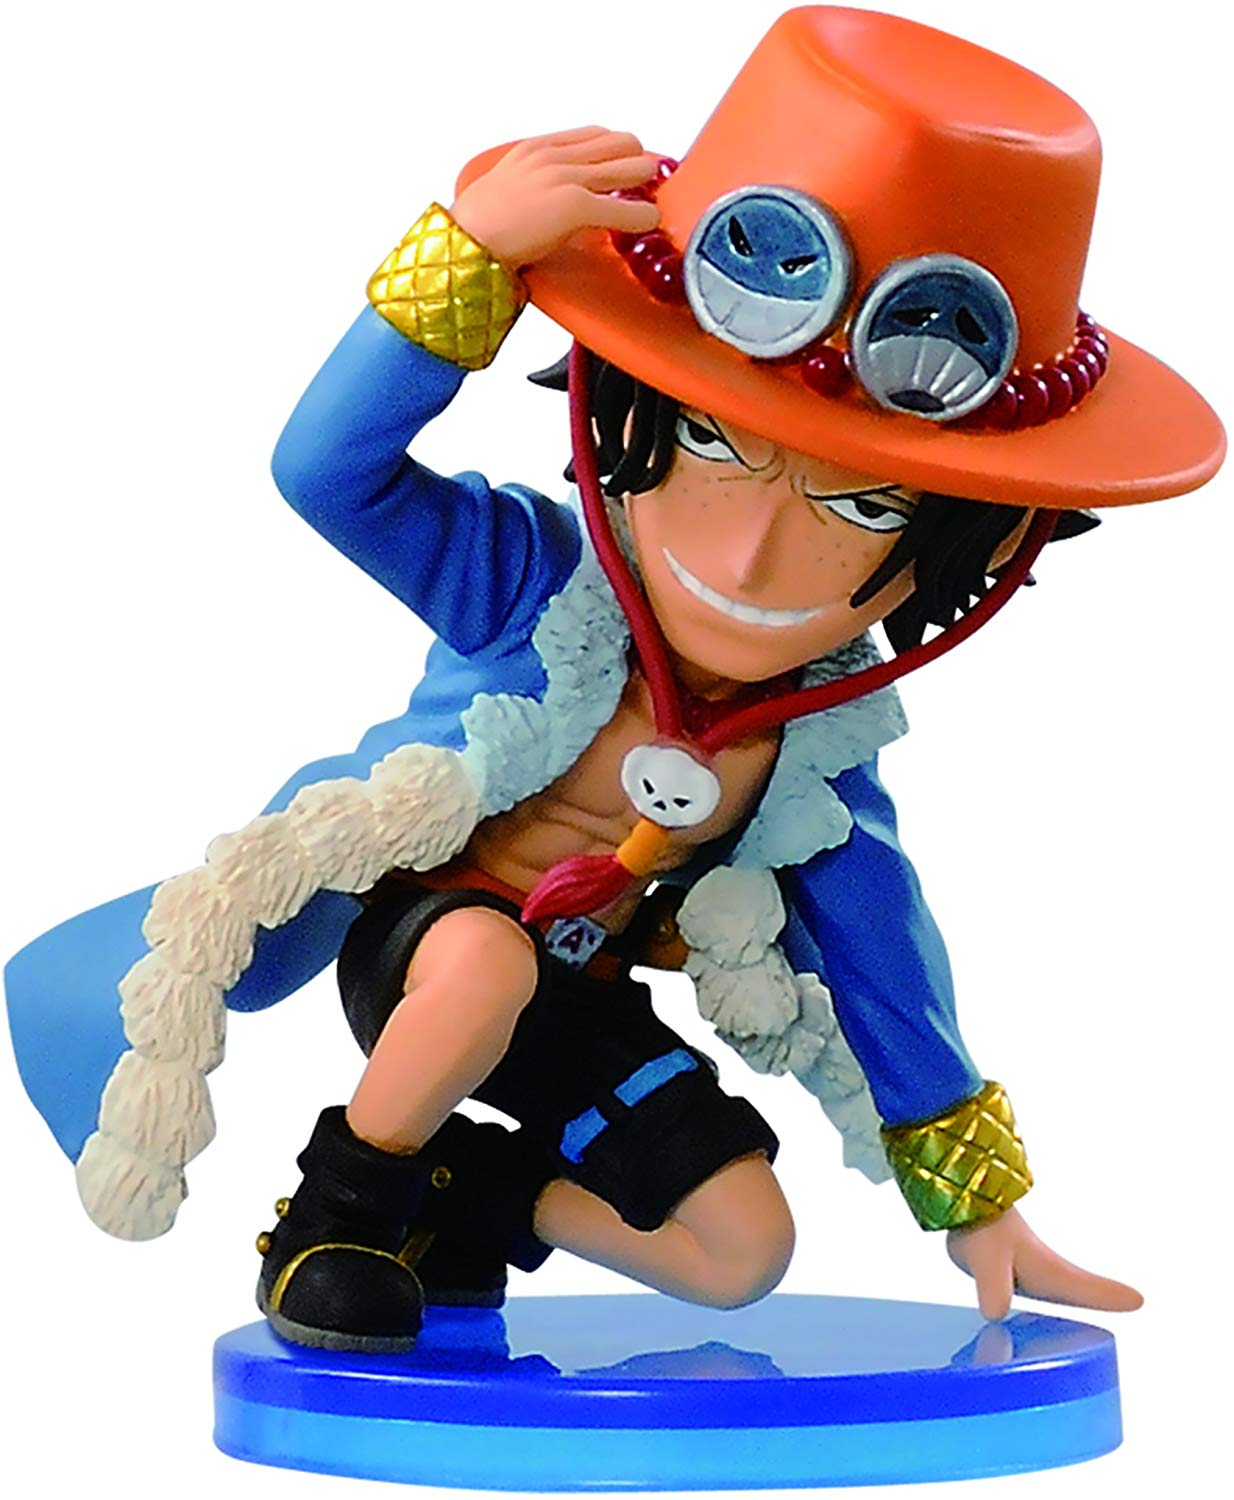 Banpresto One Piece Ace Mini World 2.5 inch Collectible Action Figure 1